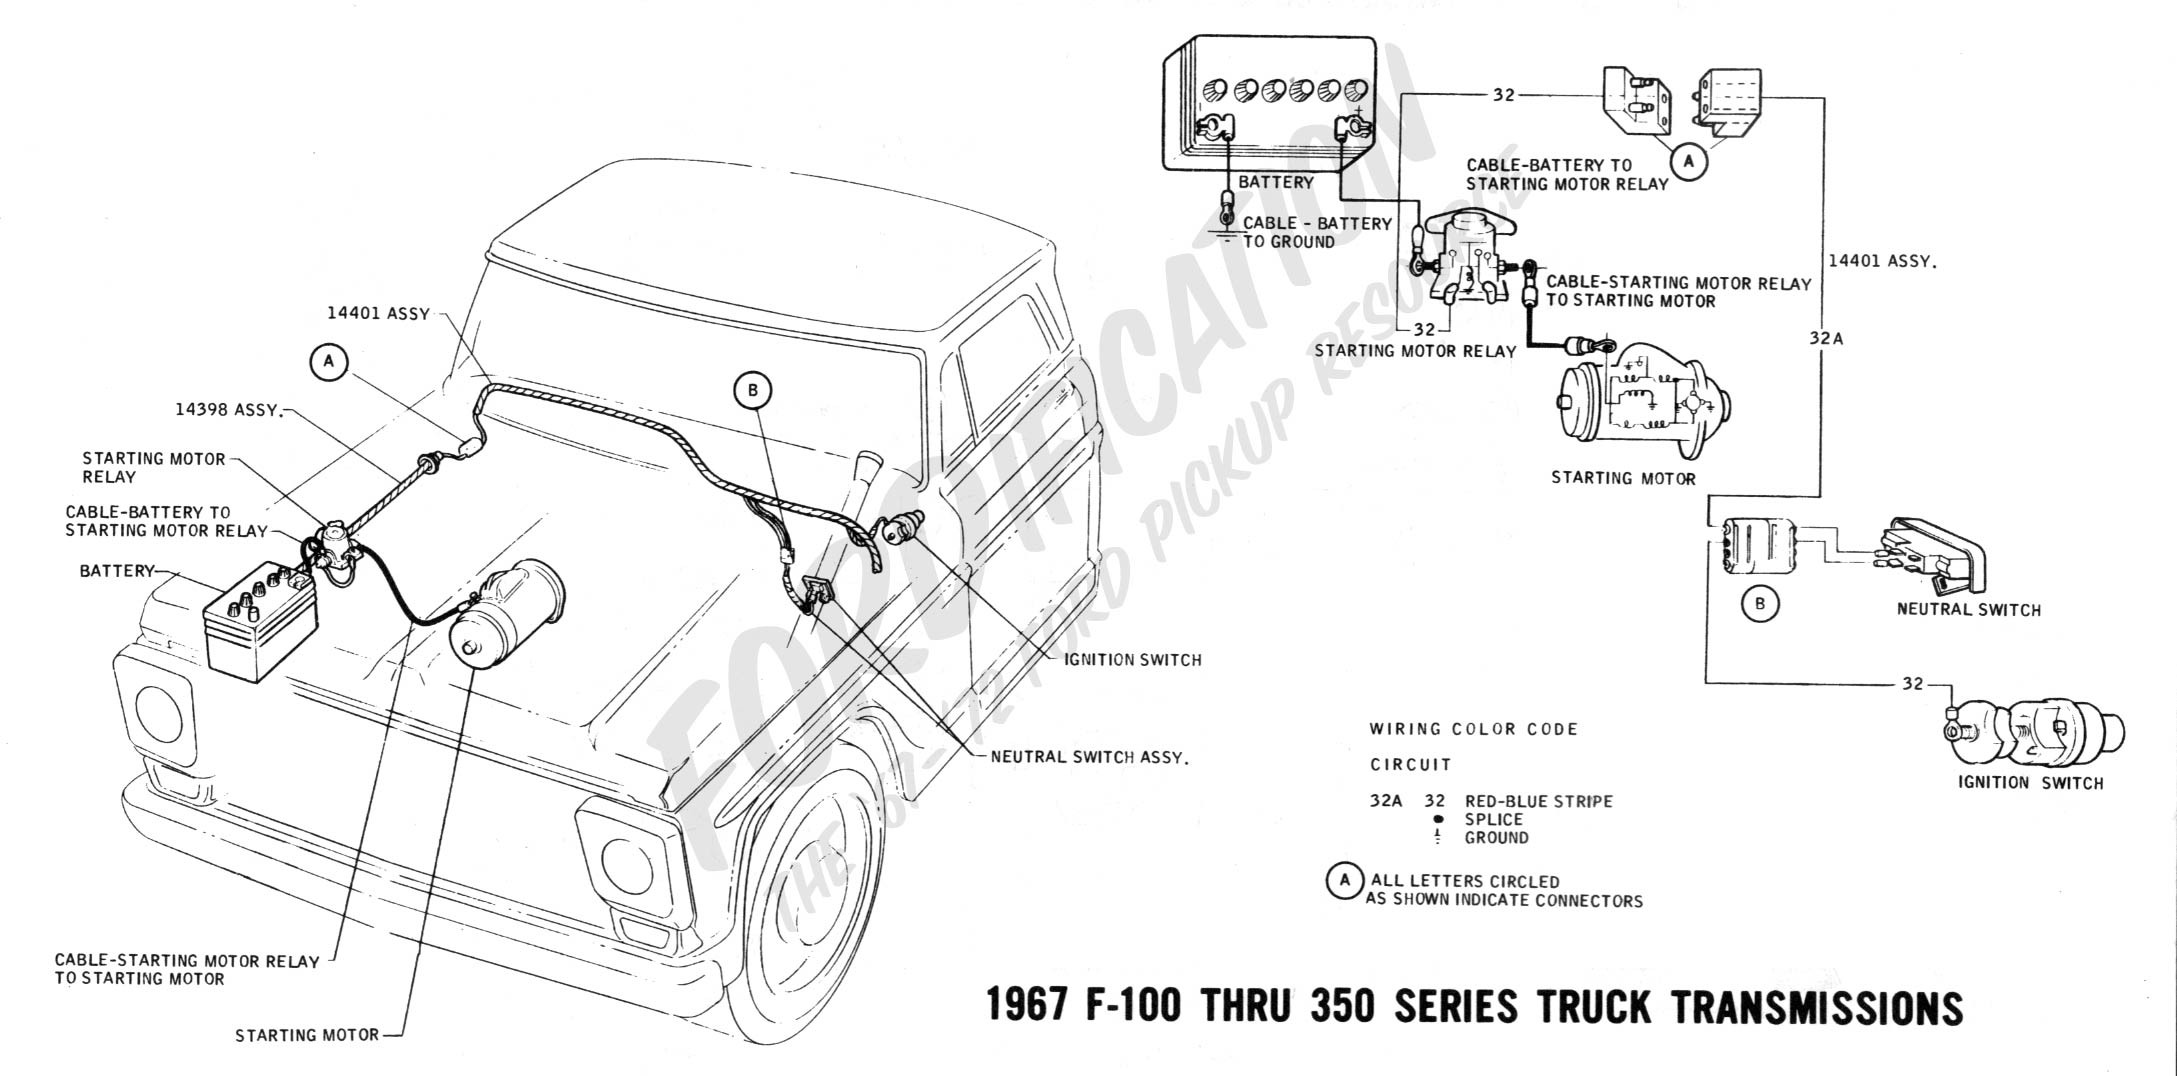 1967 F 100 thru F 350 truck transmissions 1967 Ford overdrive